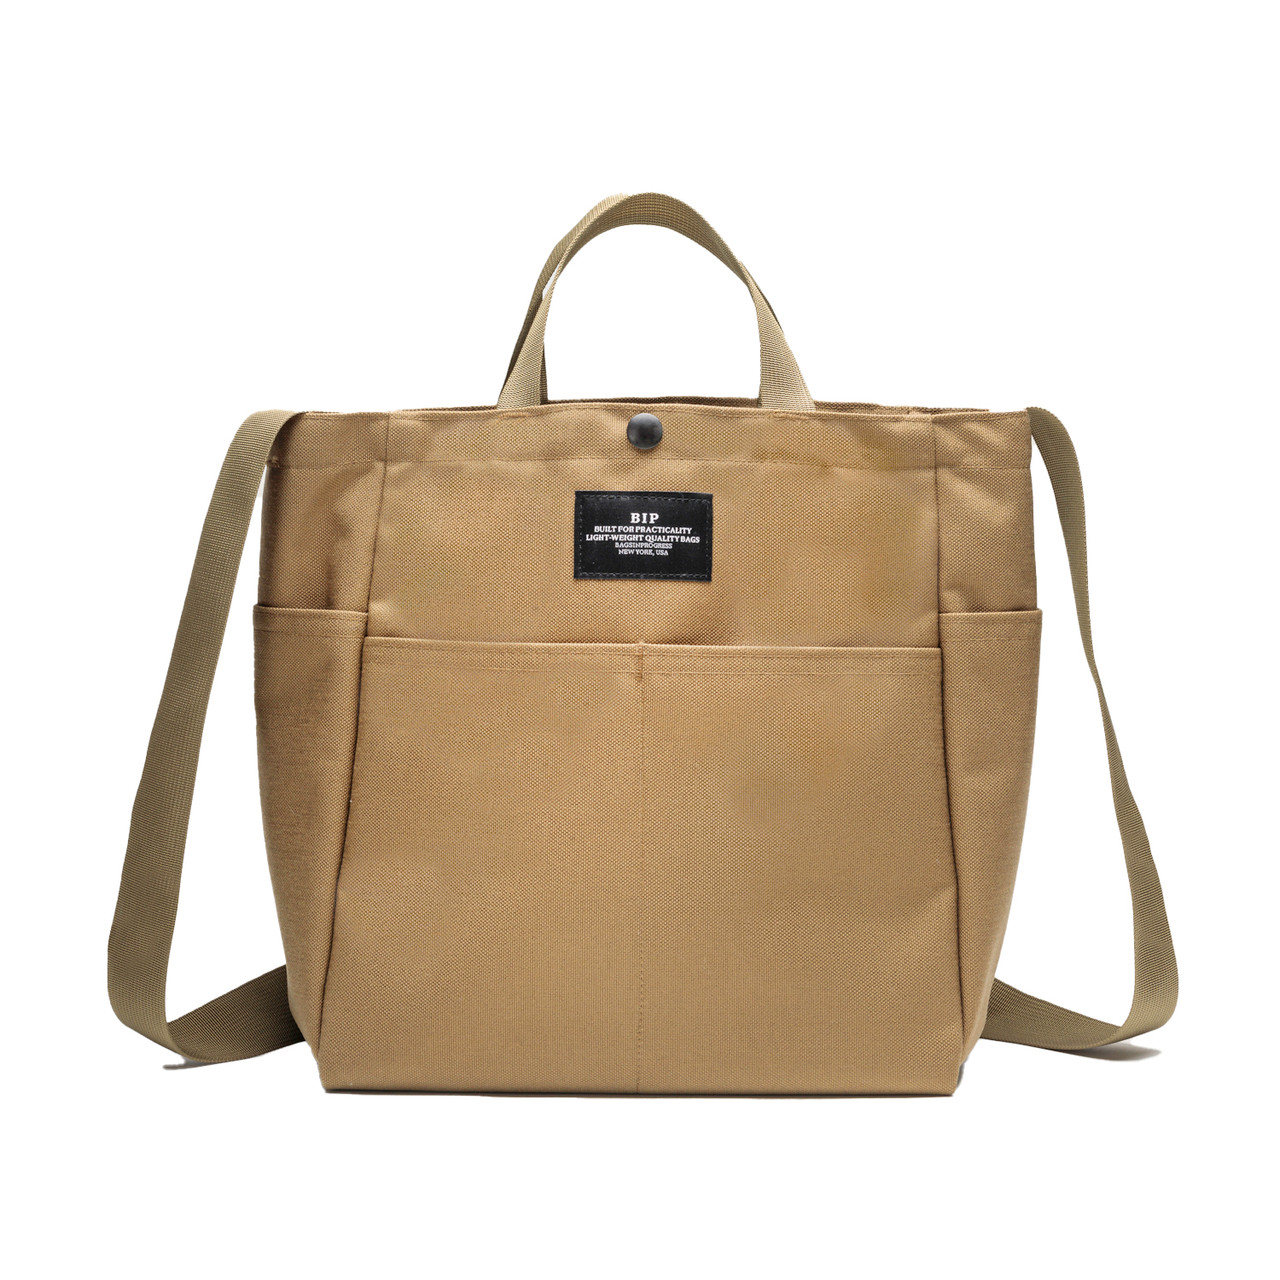 Medium Multi-Pocket Bag in Khaki, Bags In Progress, tomfoolery